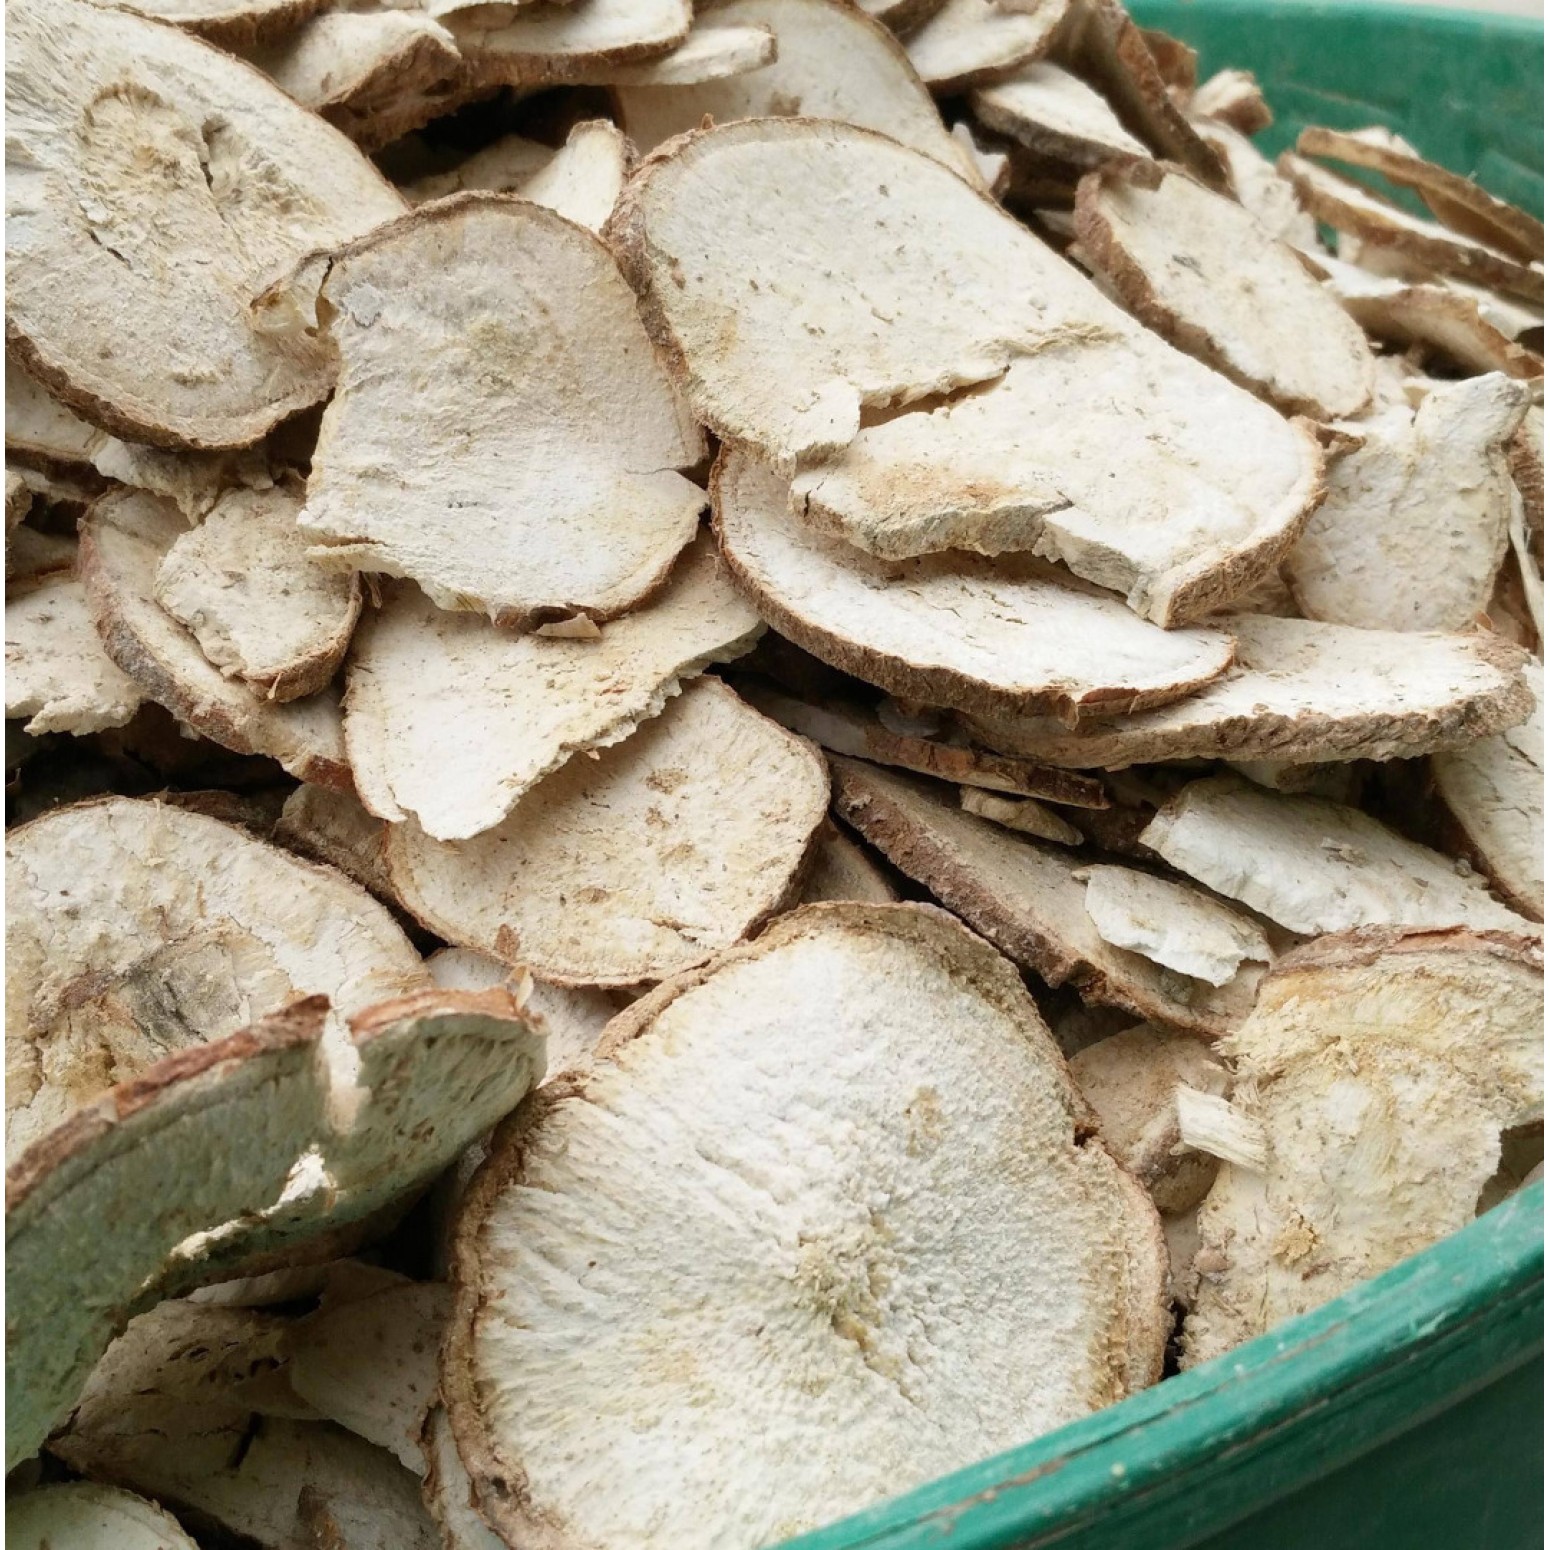 Sawatpaiboon Chopped dried cassava 1 kg.